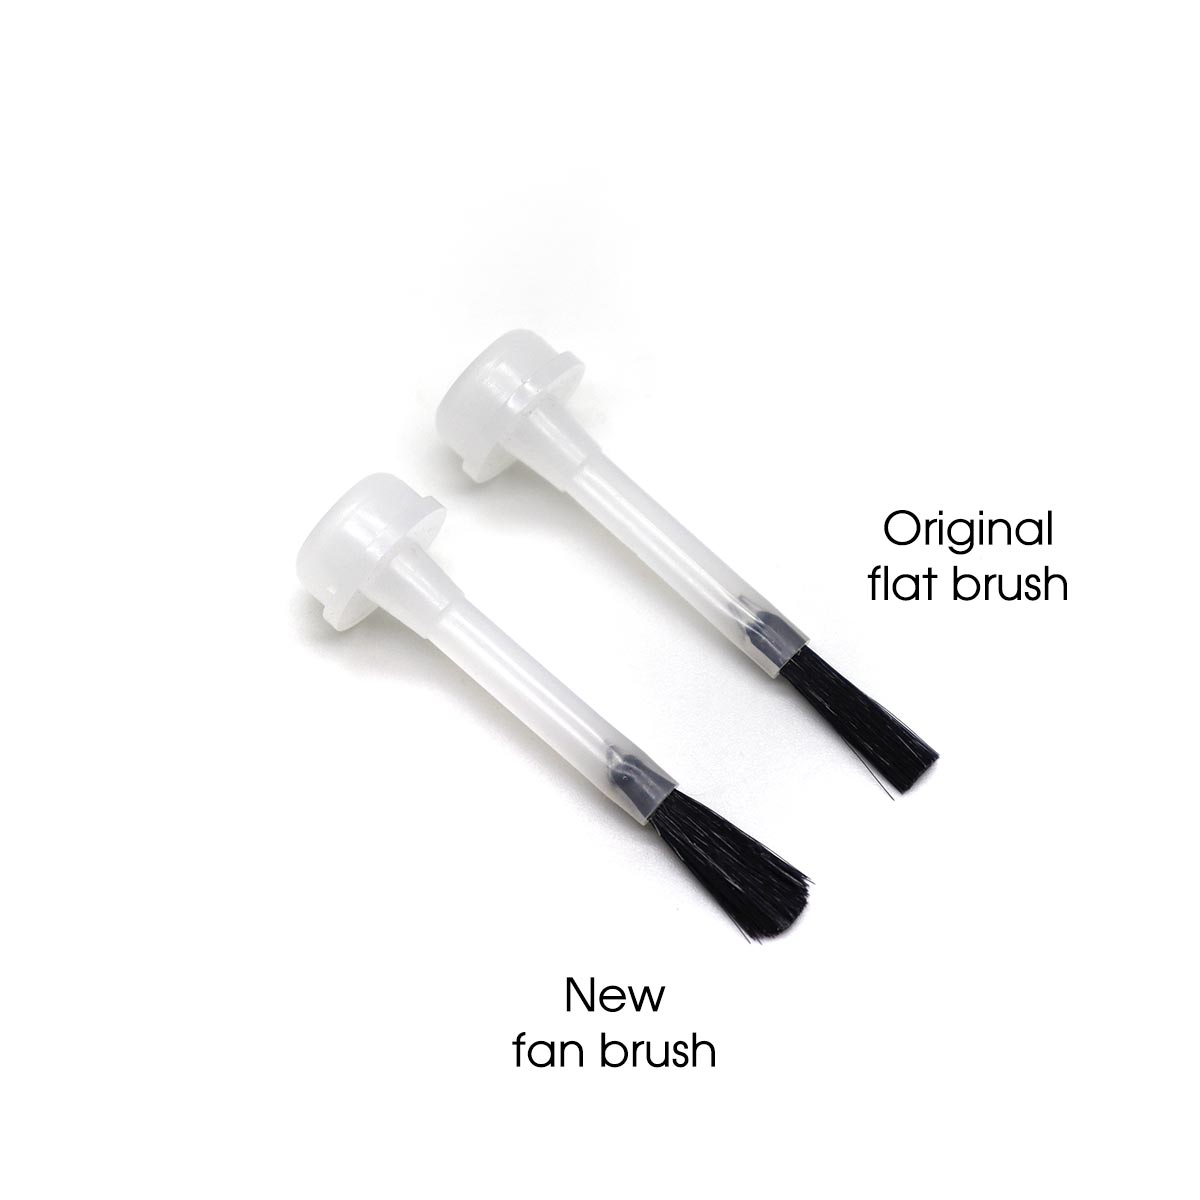 Replacement brush x 10 - FAN BRUSH